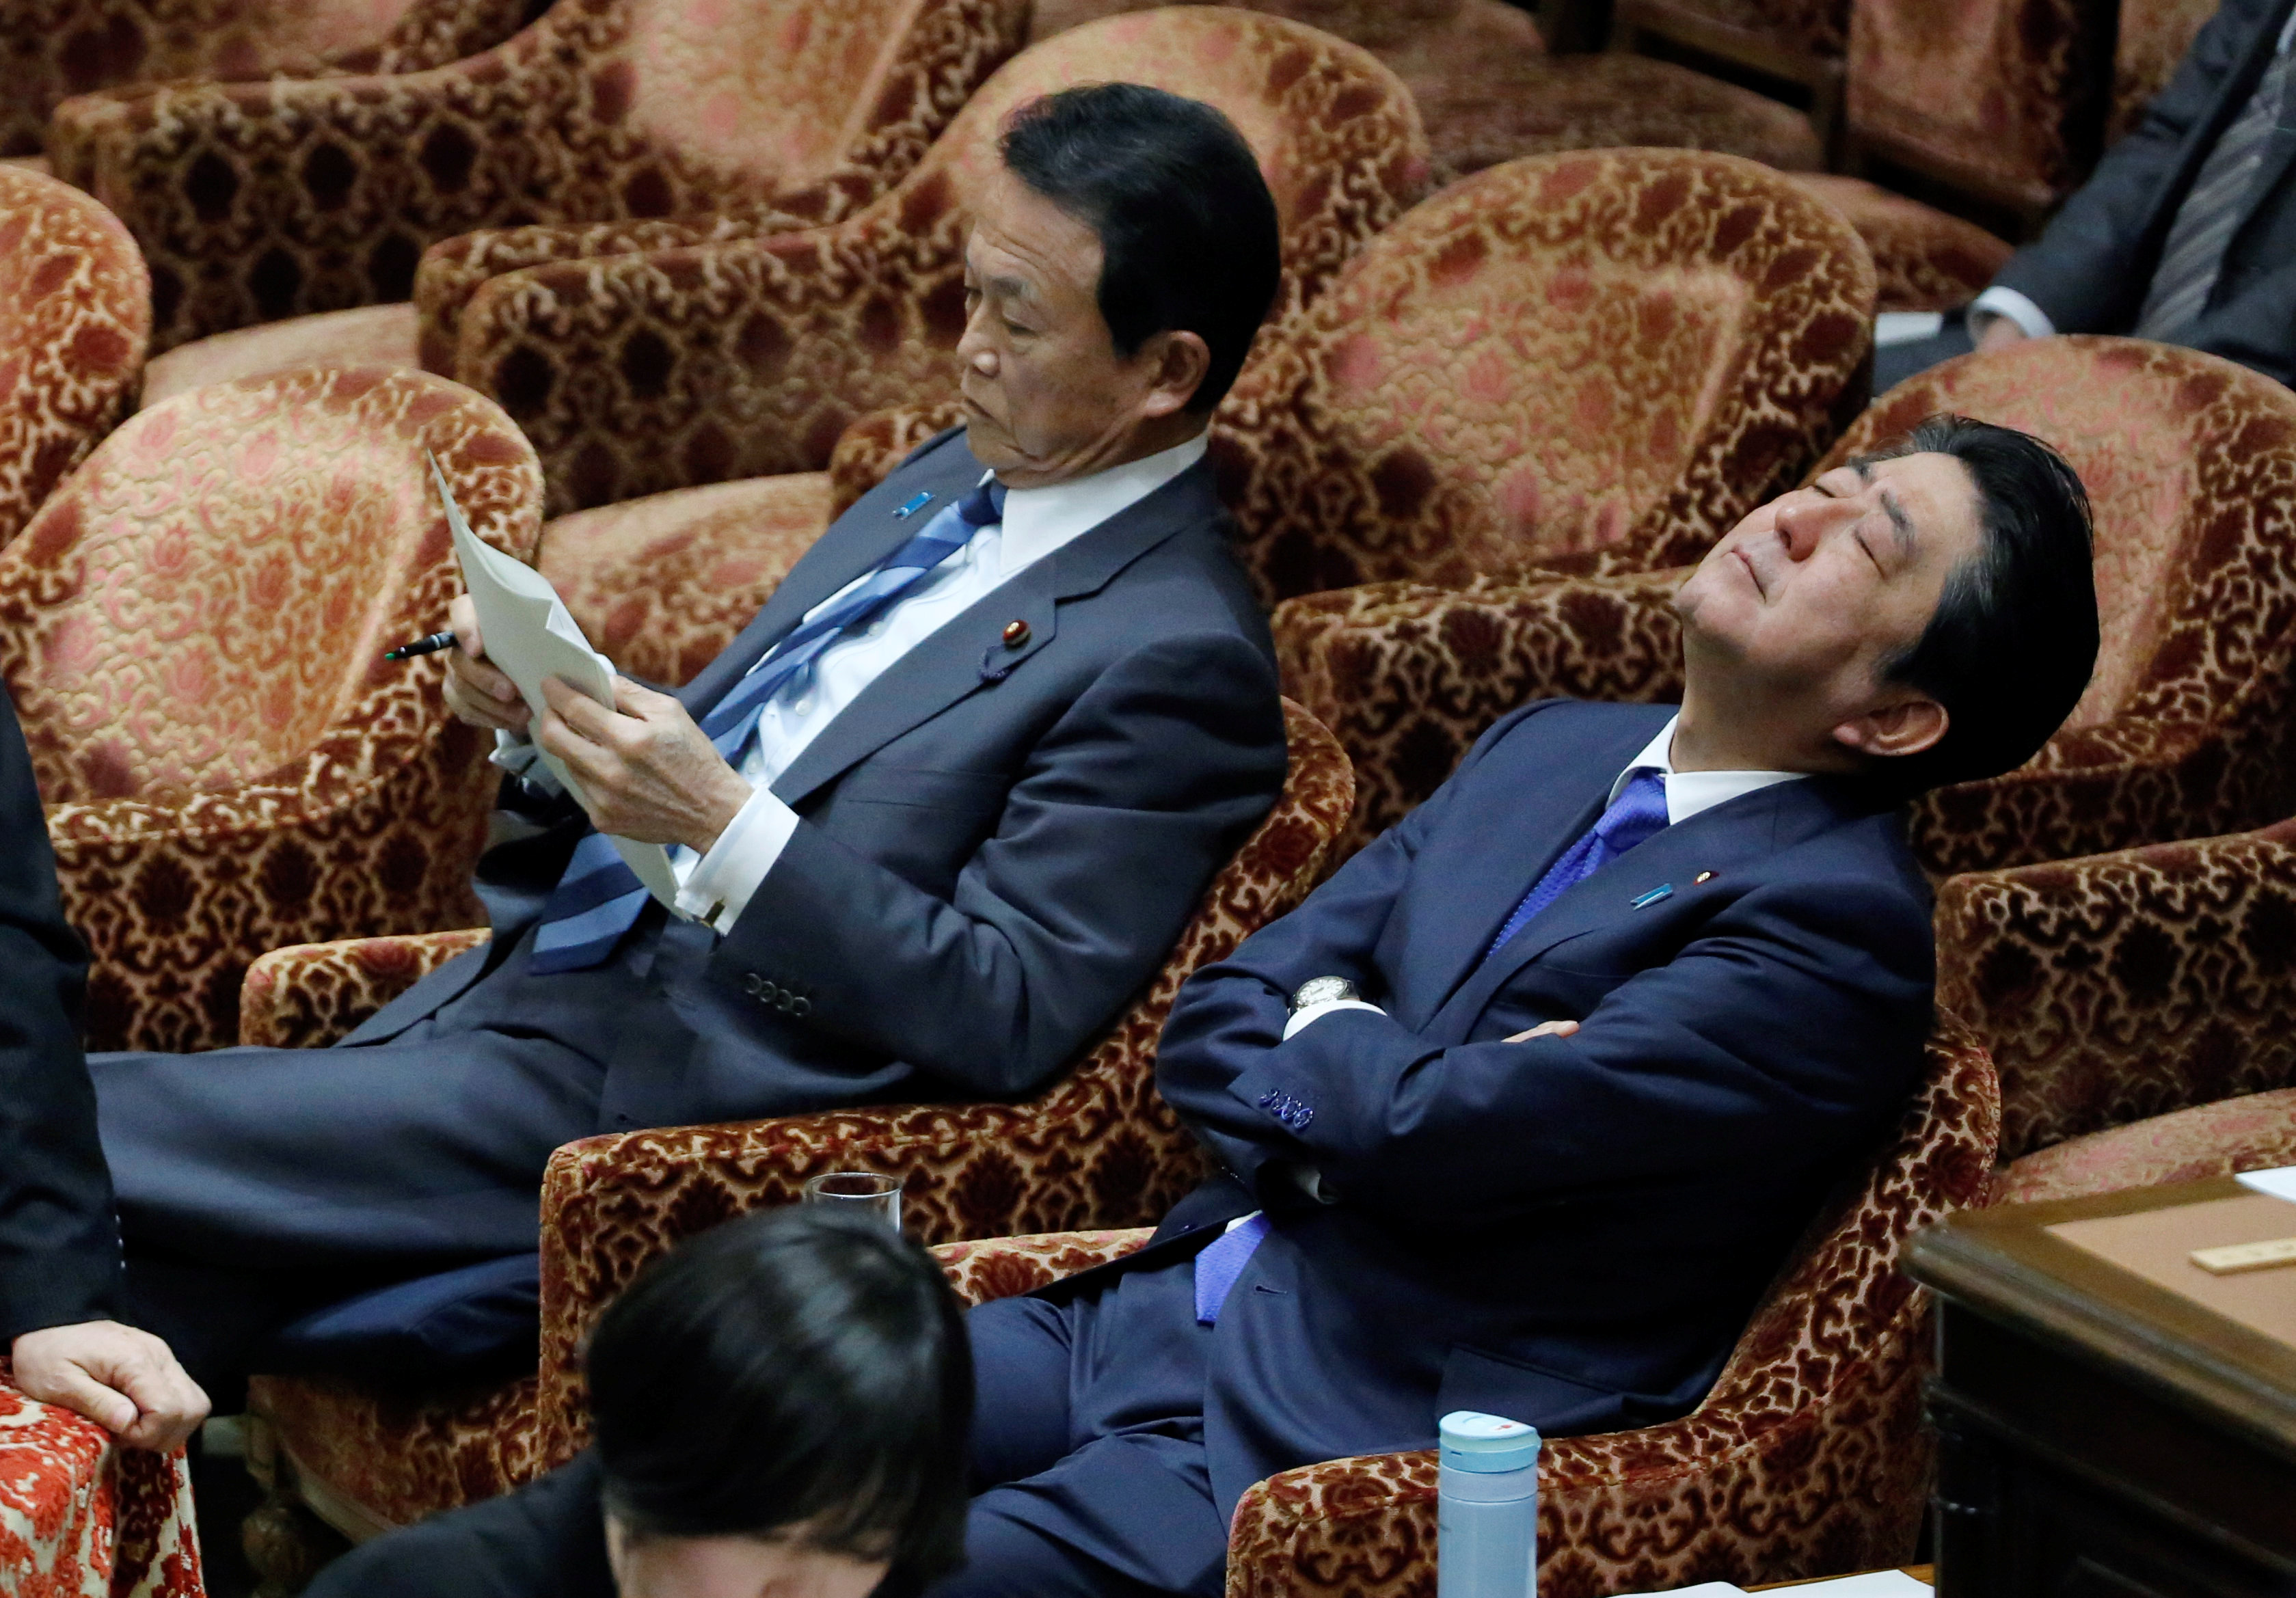 Japanese premier, finance minister face pressure over suspected cronyism scandal